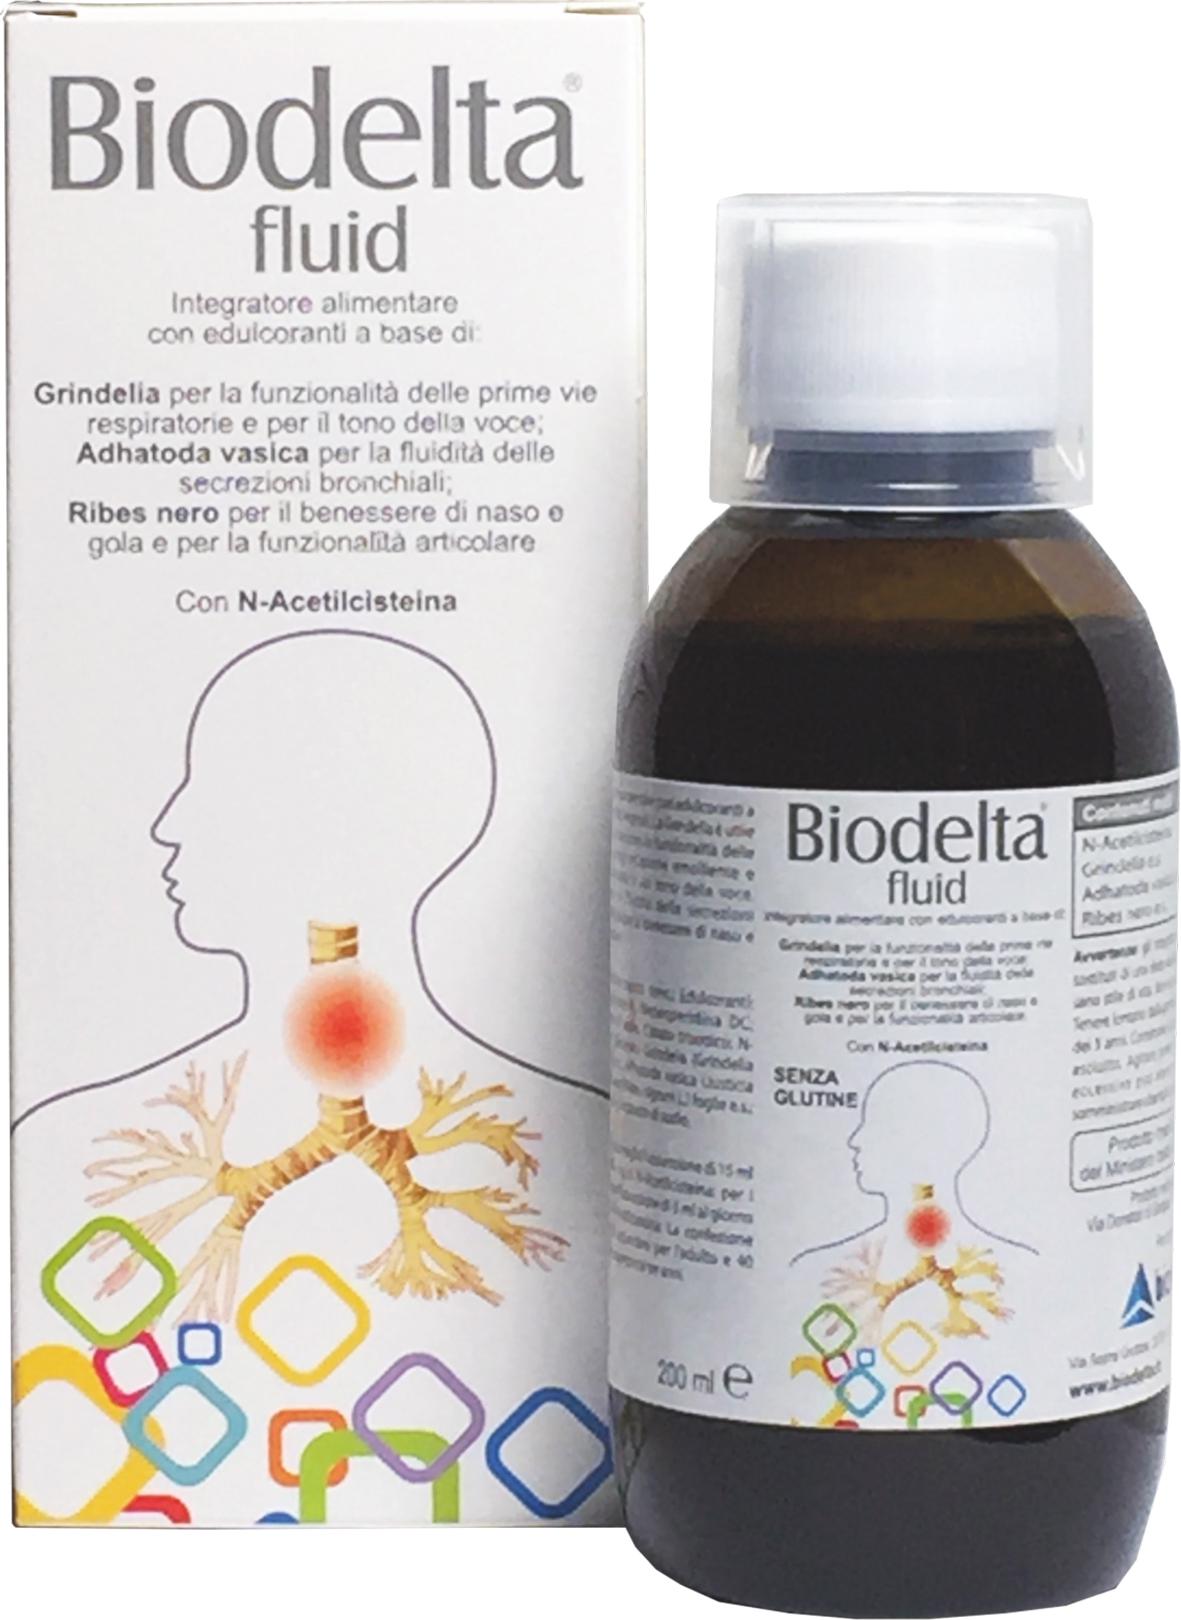 Biodelta® fluid